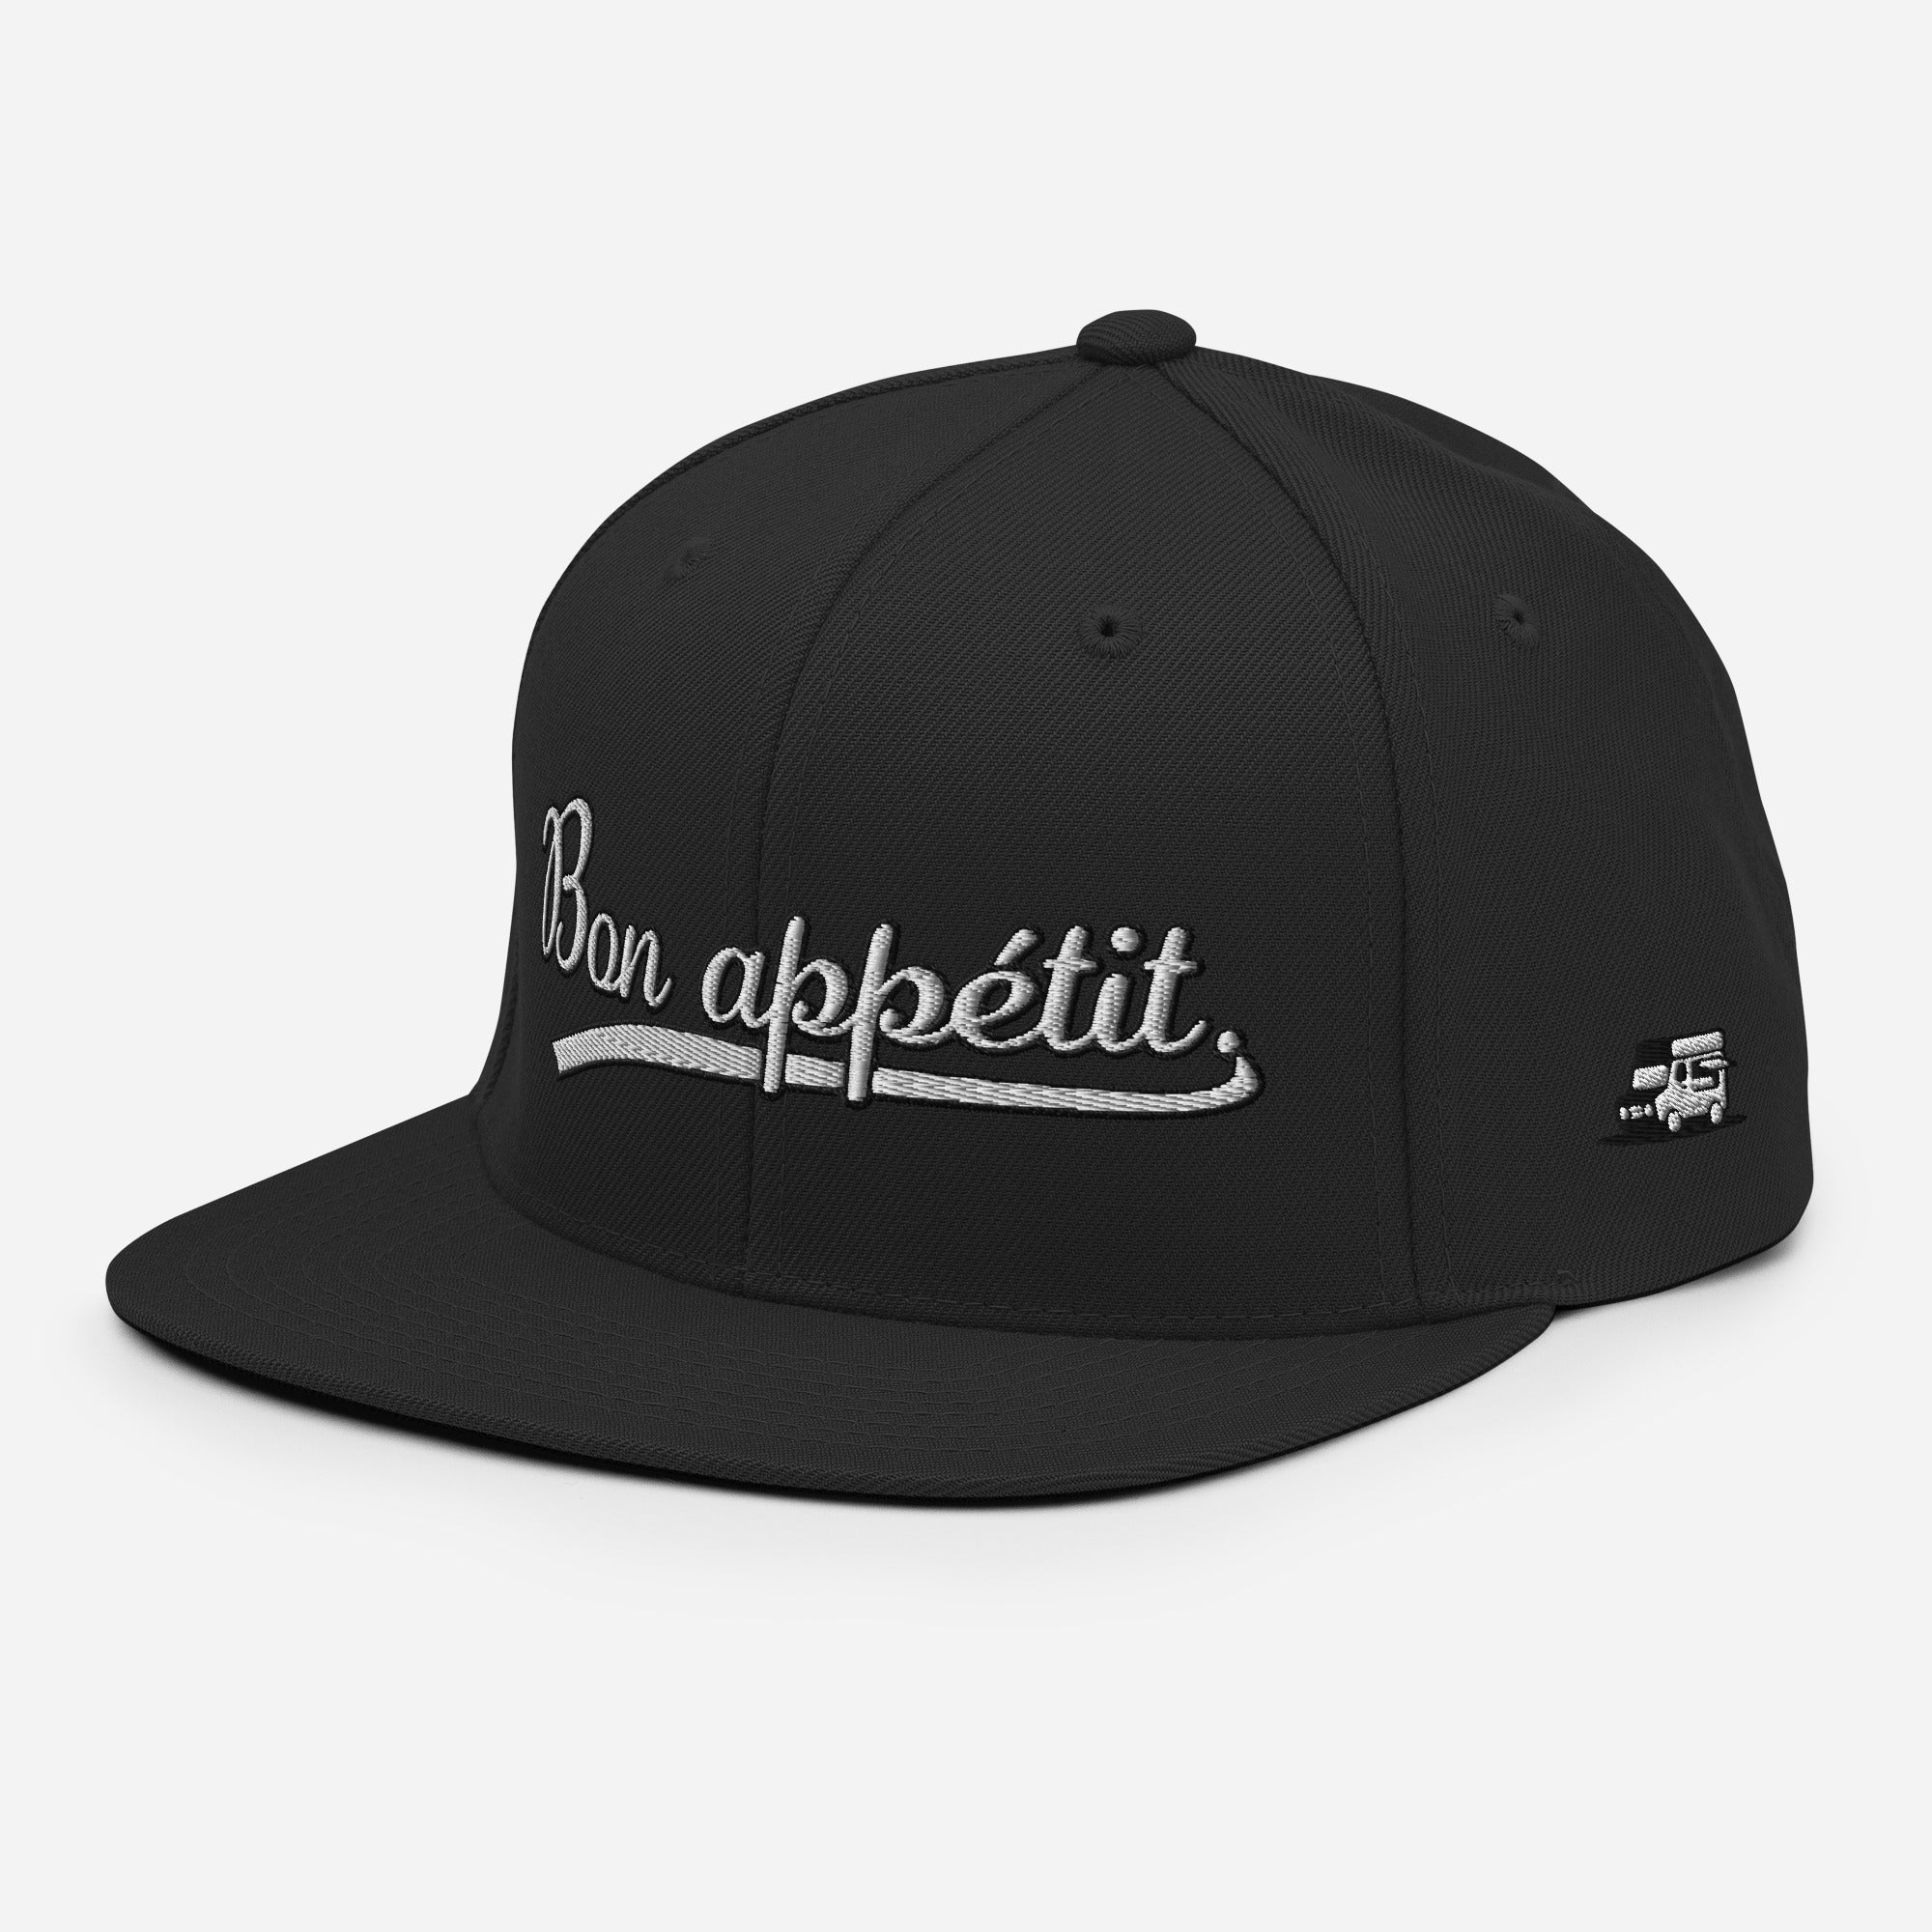 Snapback Cap [Bon appetit logo] Black